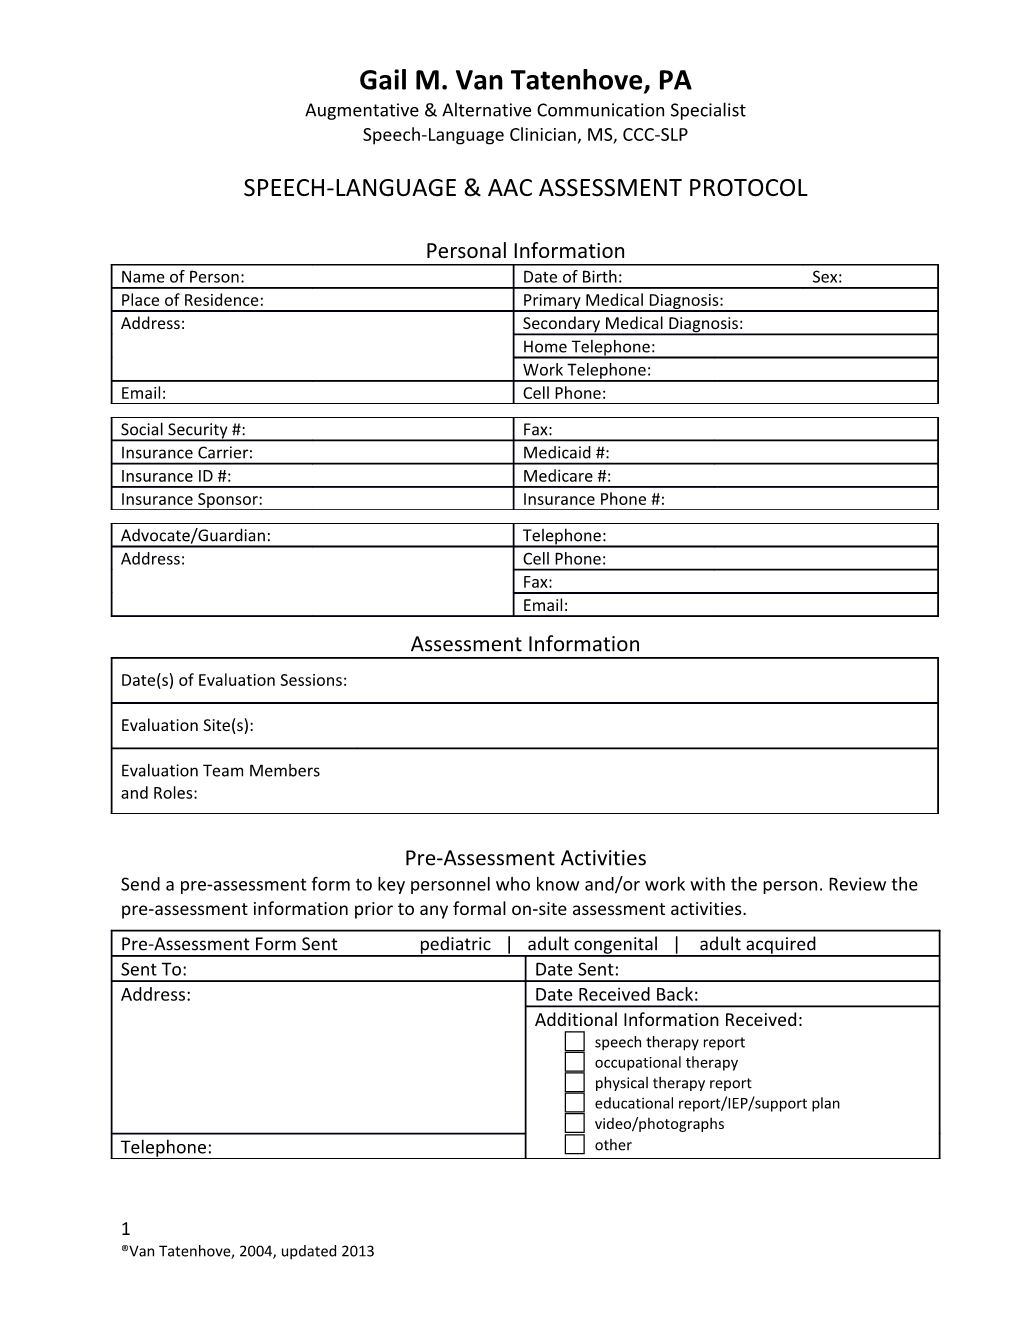 Speech-Language and AAC Assessment